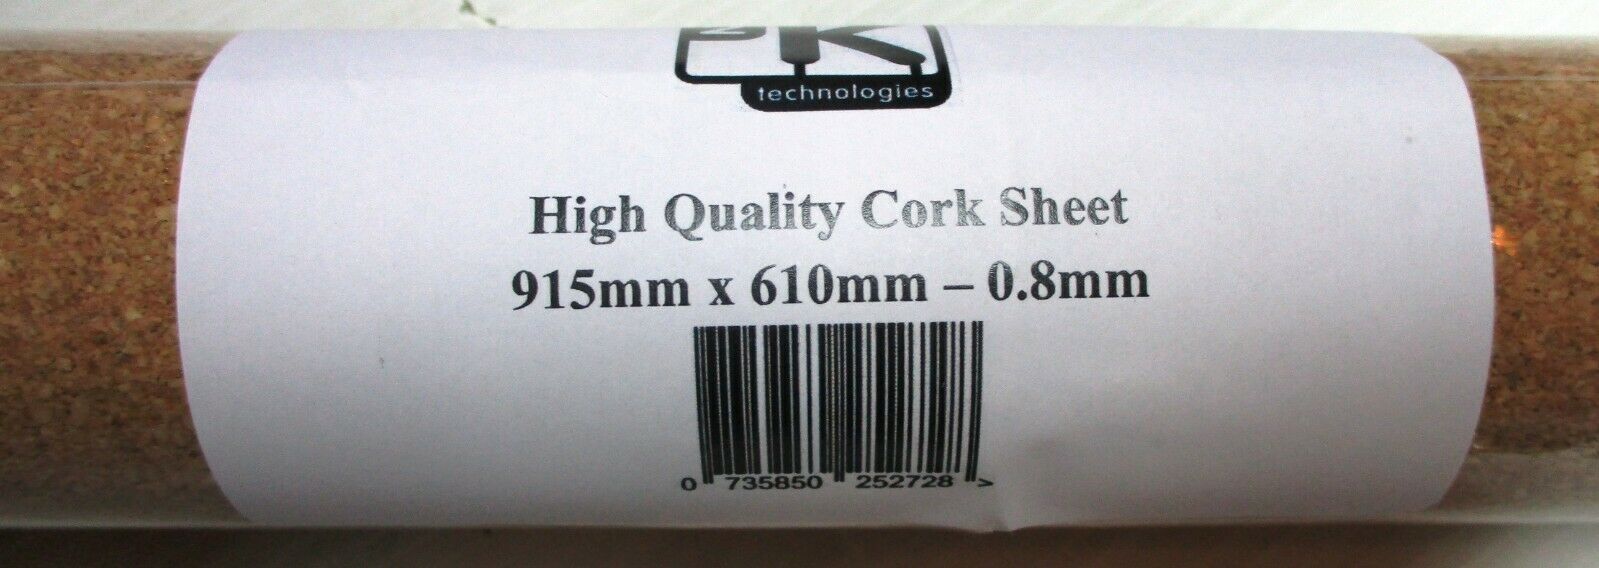 Cork Track Bed - 4 Rolls - 915mm (36") X 610mm (24") X 0.8mm (1/32") Thick - T48